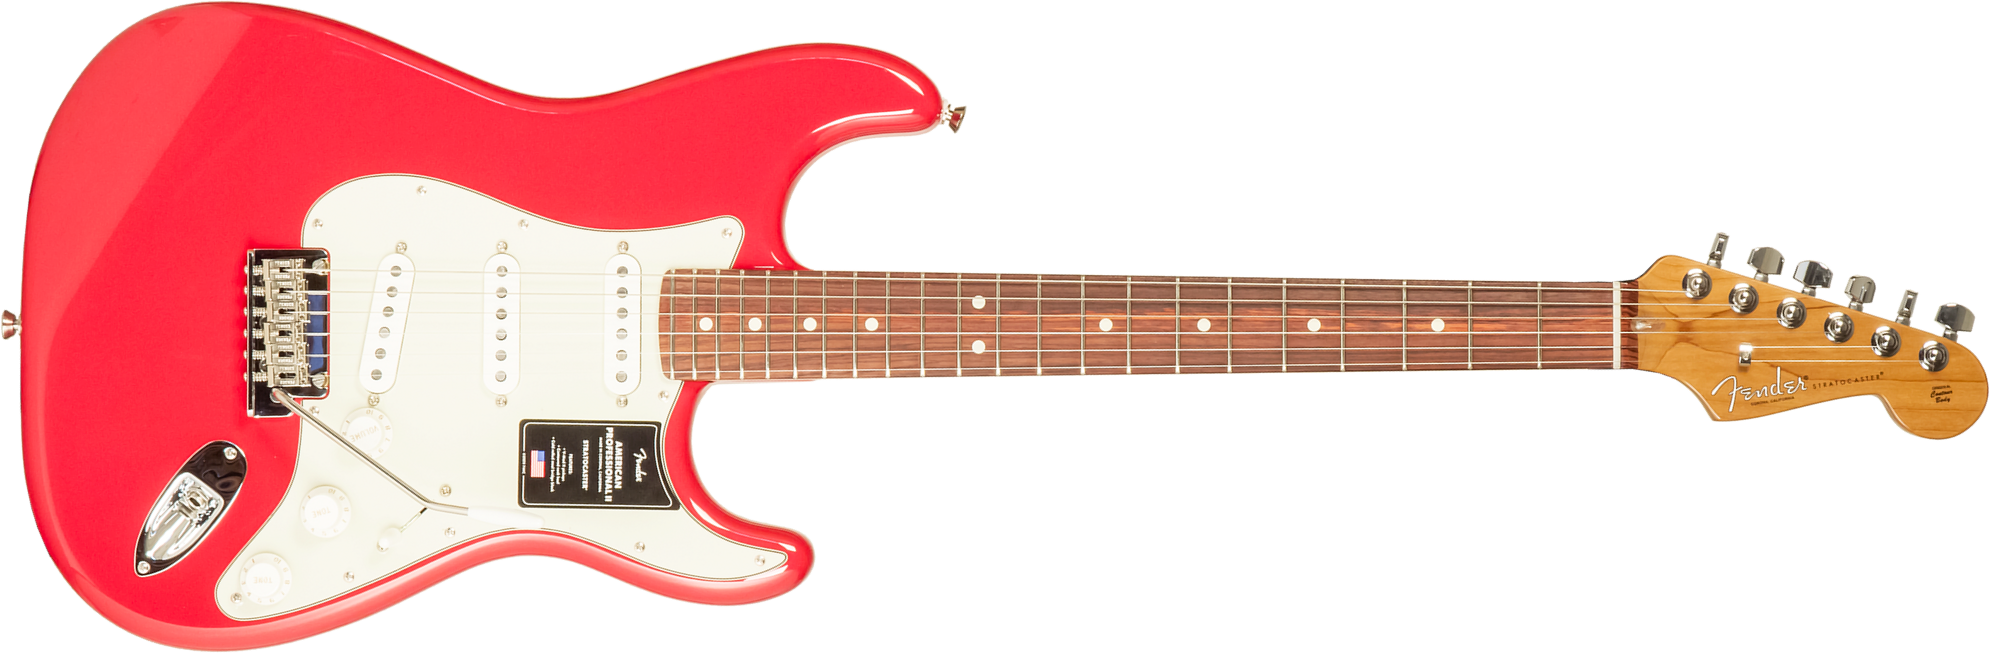 Fender Strat American Professional Ii Ltd Usa 3s Trem Rw - Fiesta Red - Guitarra eléctrica con forma de str. - Main picture